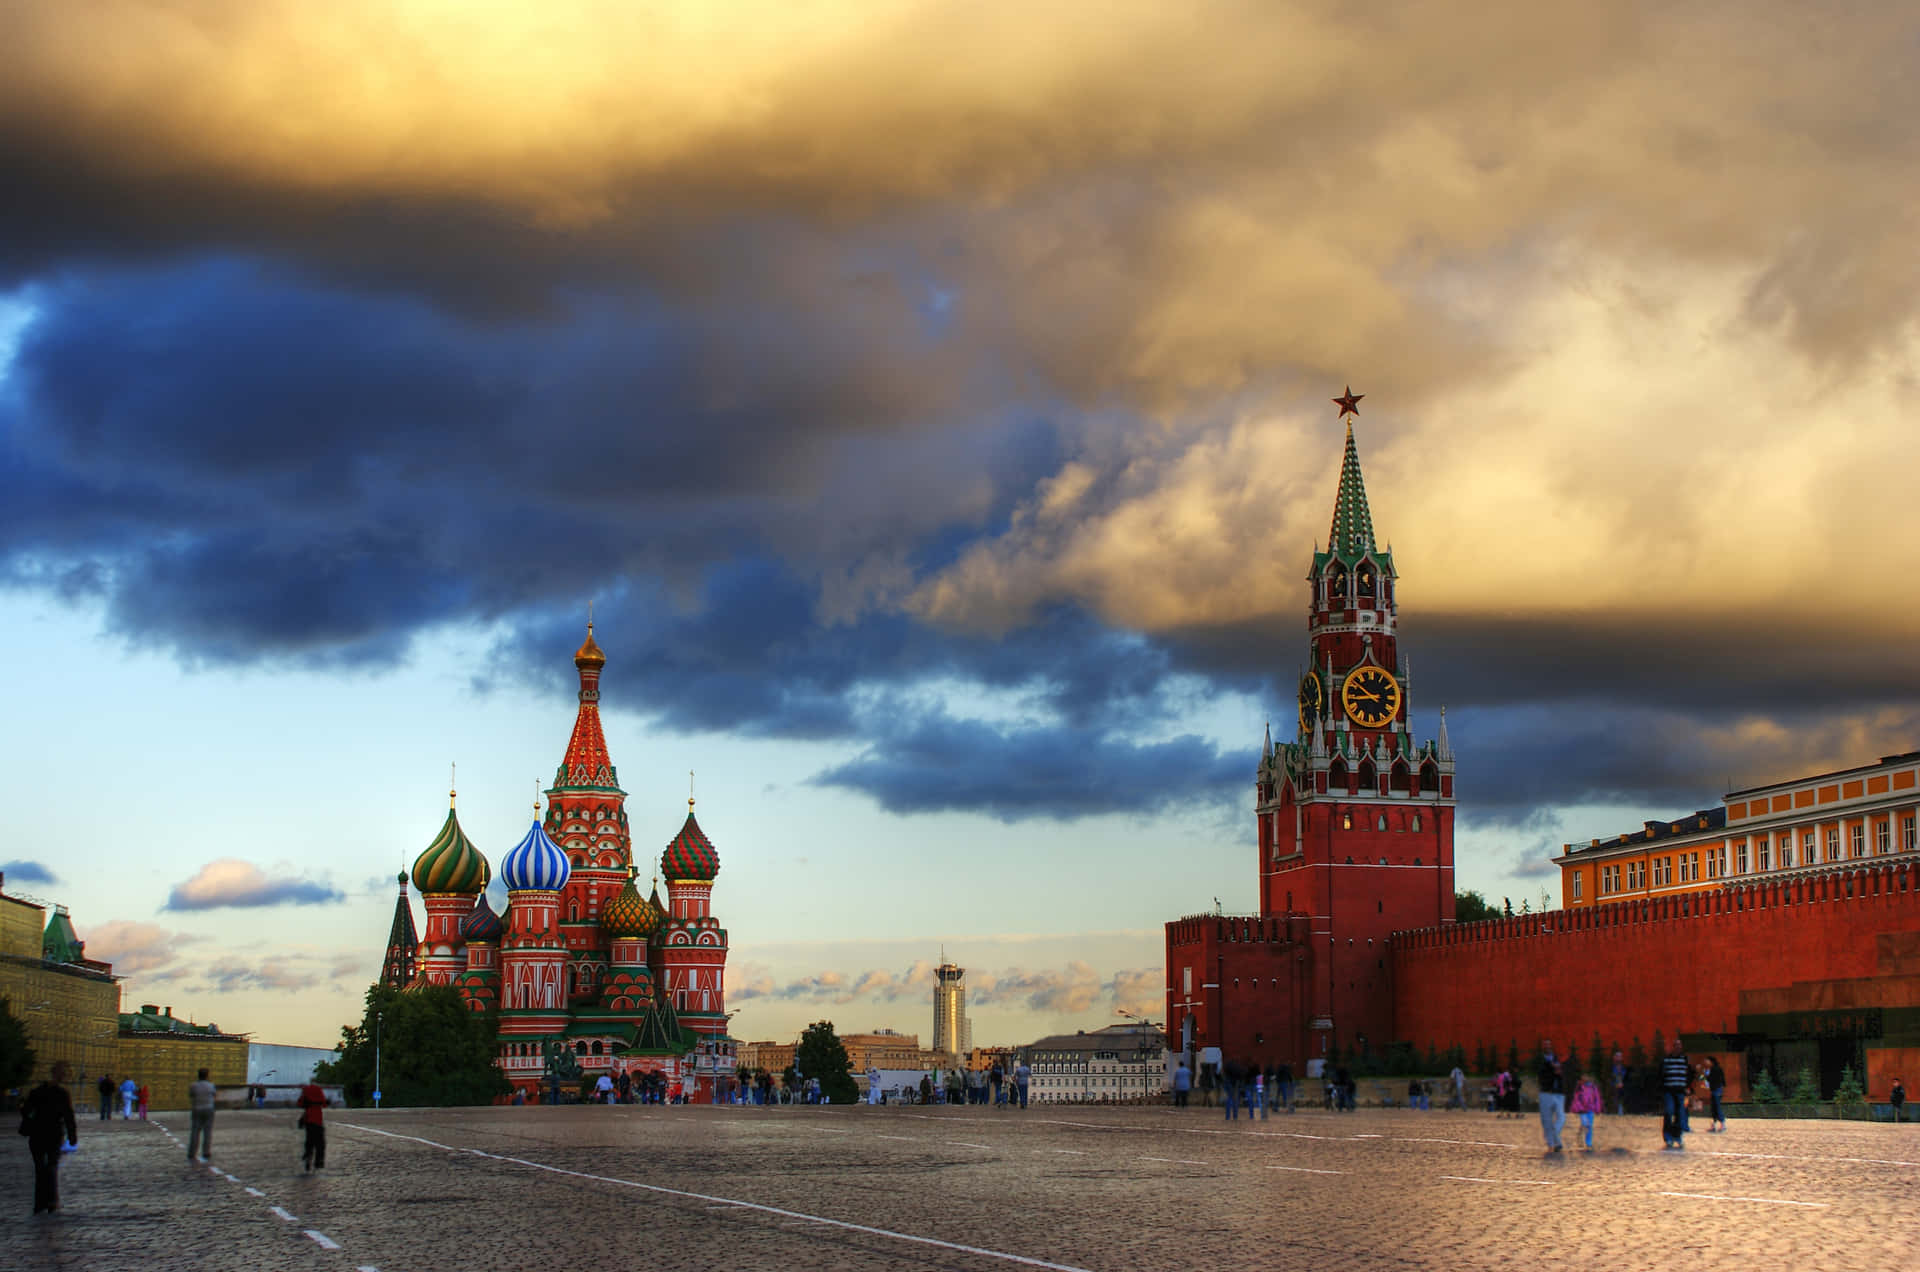 Bedövande Kremlin (idiomatic Expression Meaning 